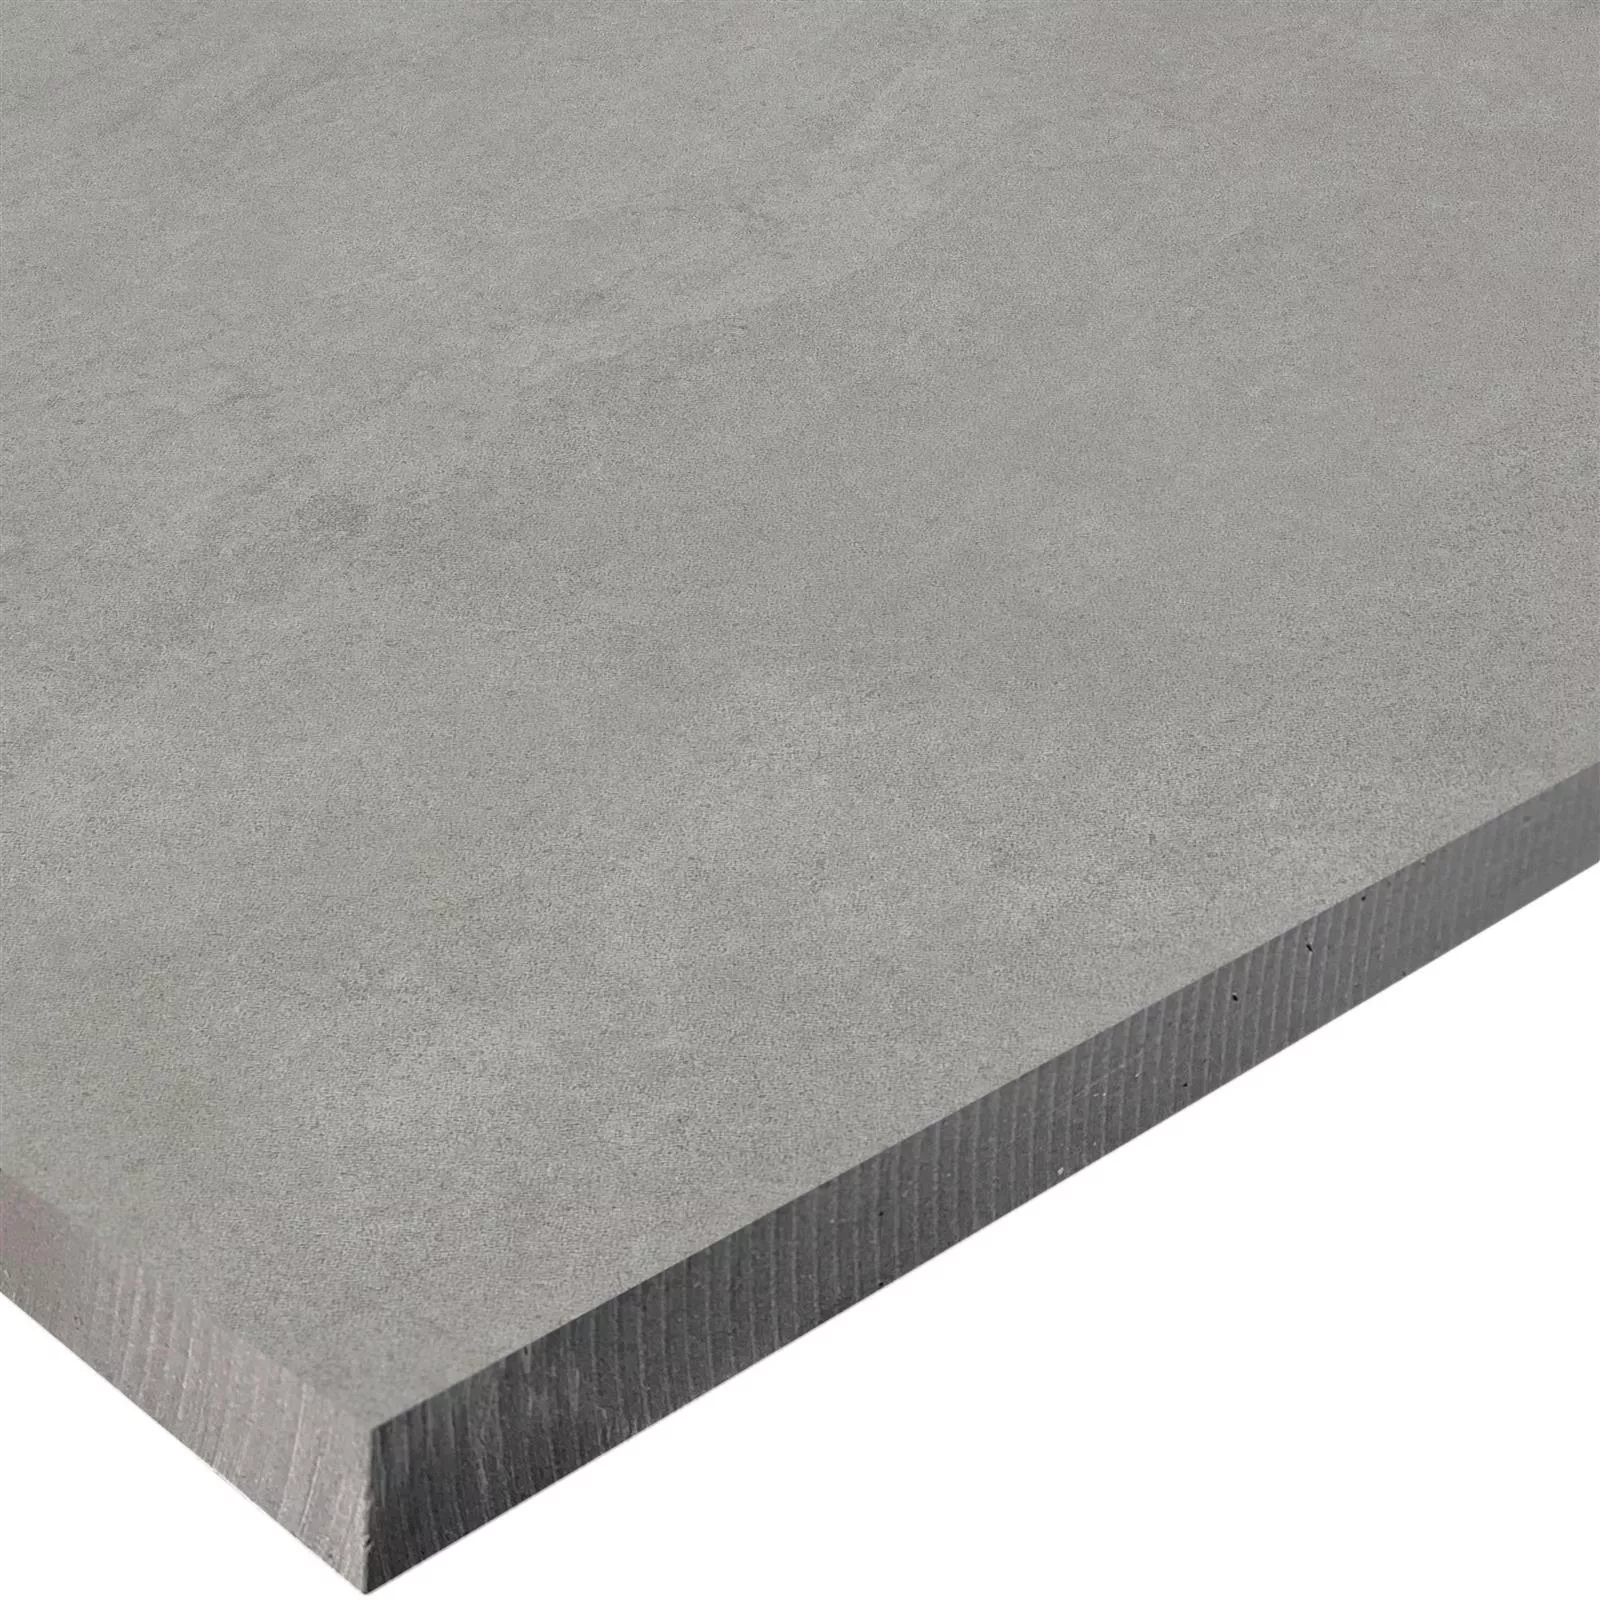 Terrace Tiles Cement Optic Glinde Grey 60x60cm